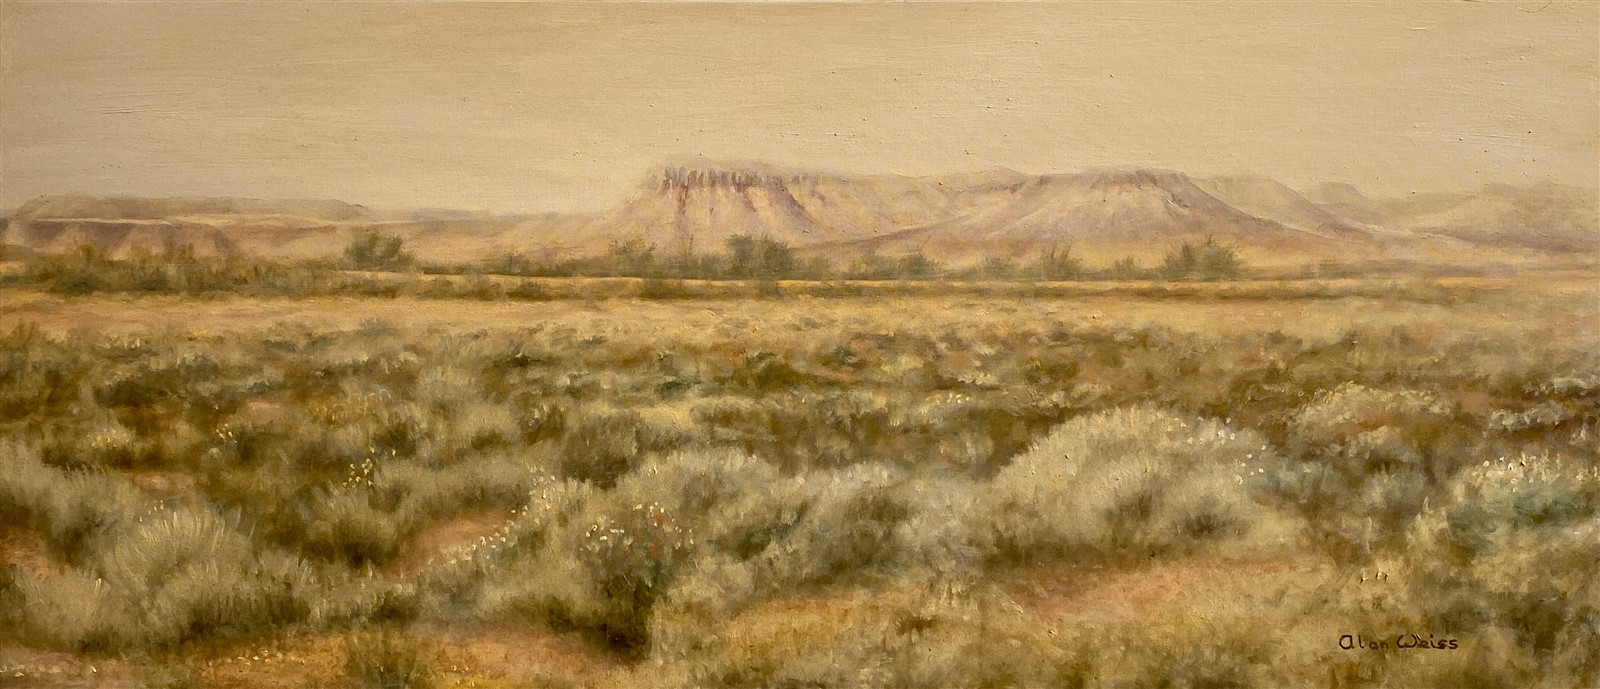 Desolation (1600 x 689)